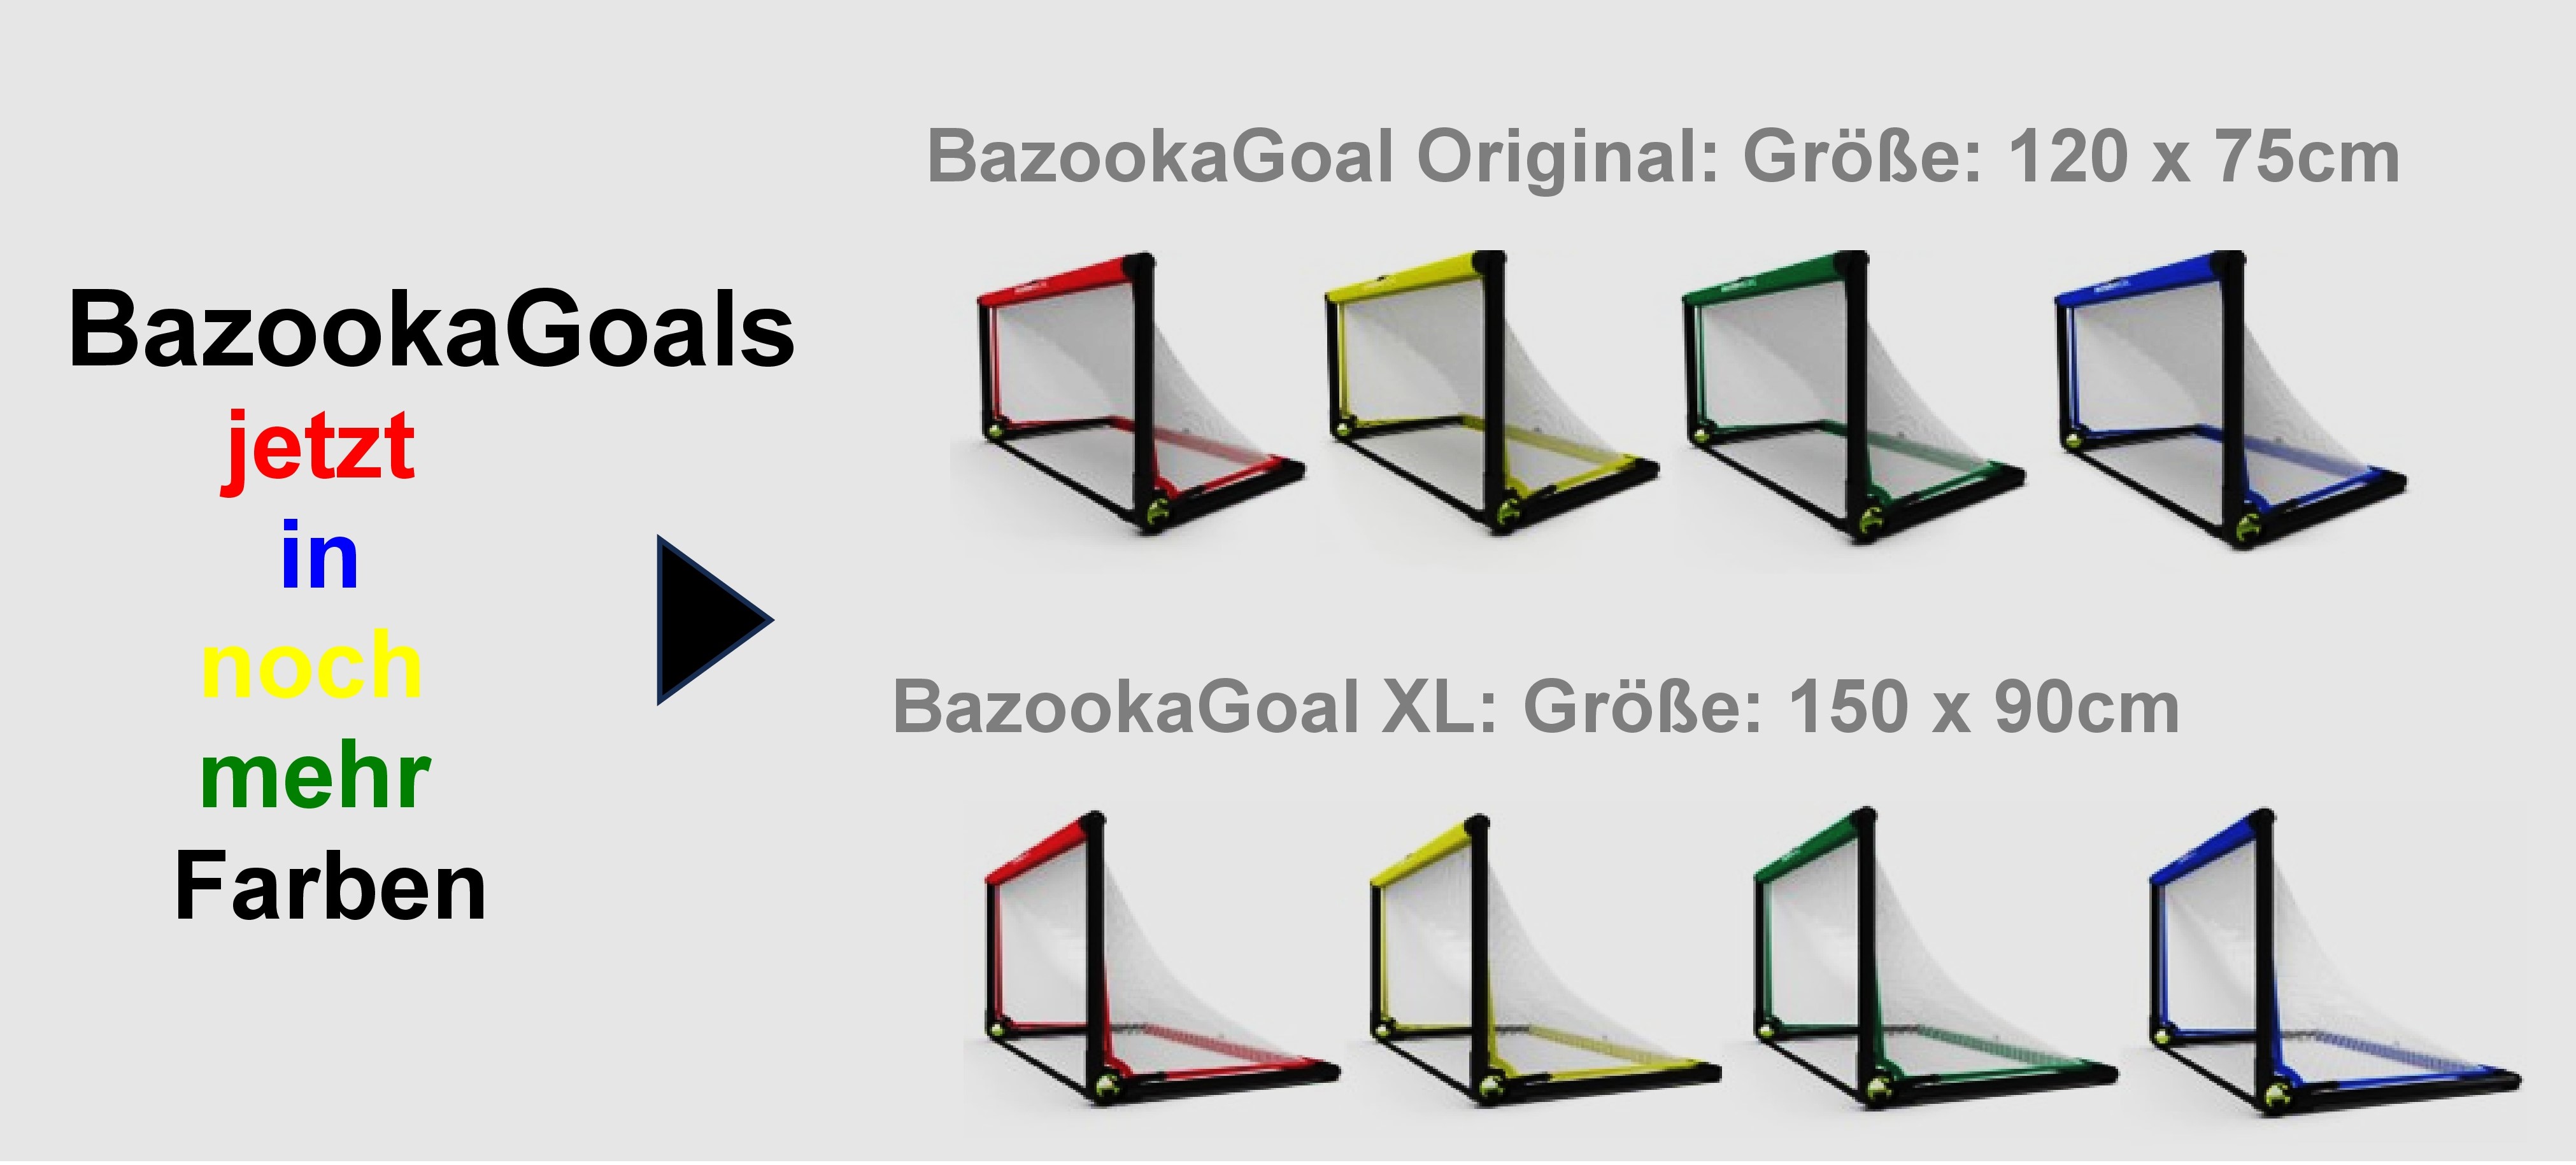 BazookaGoals farbig